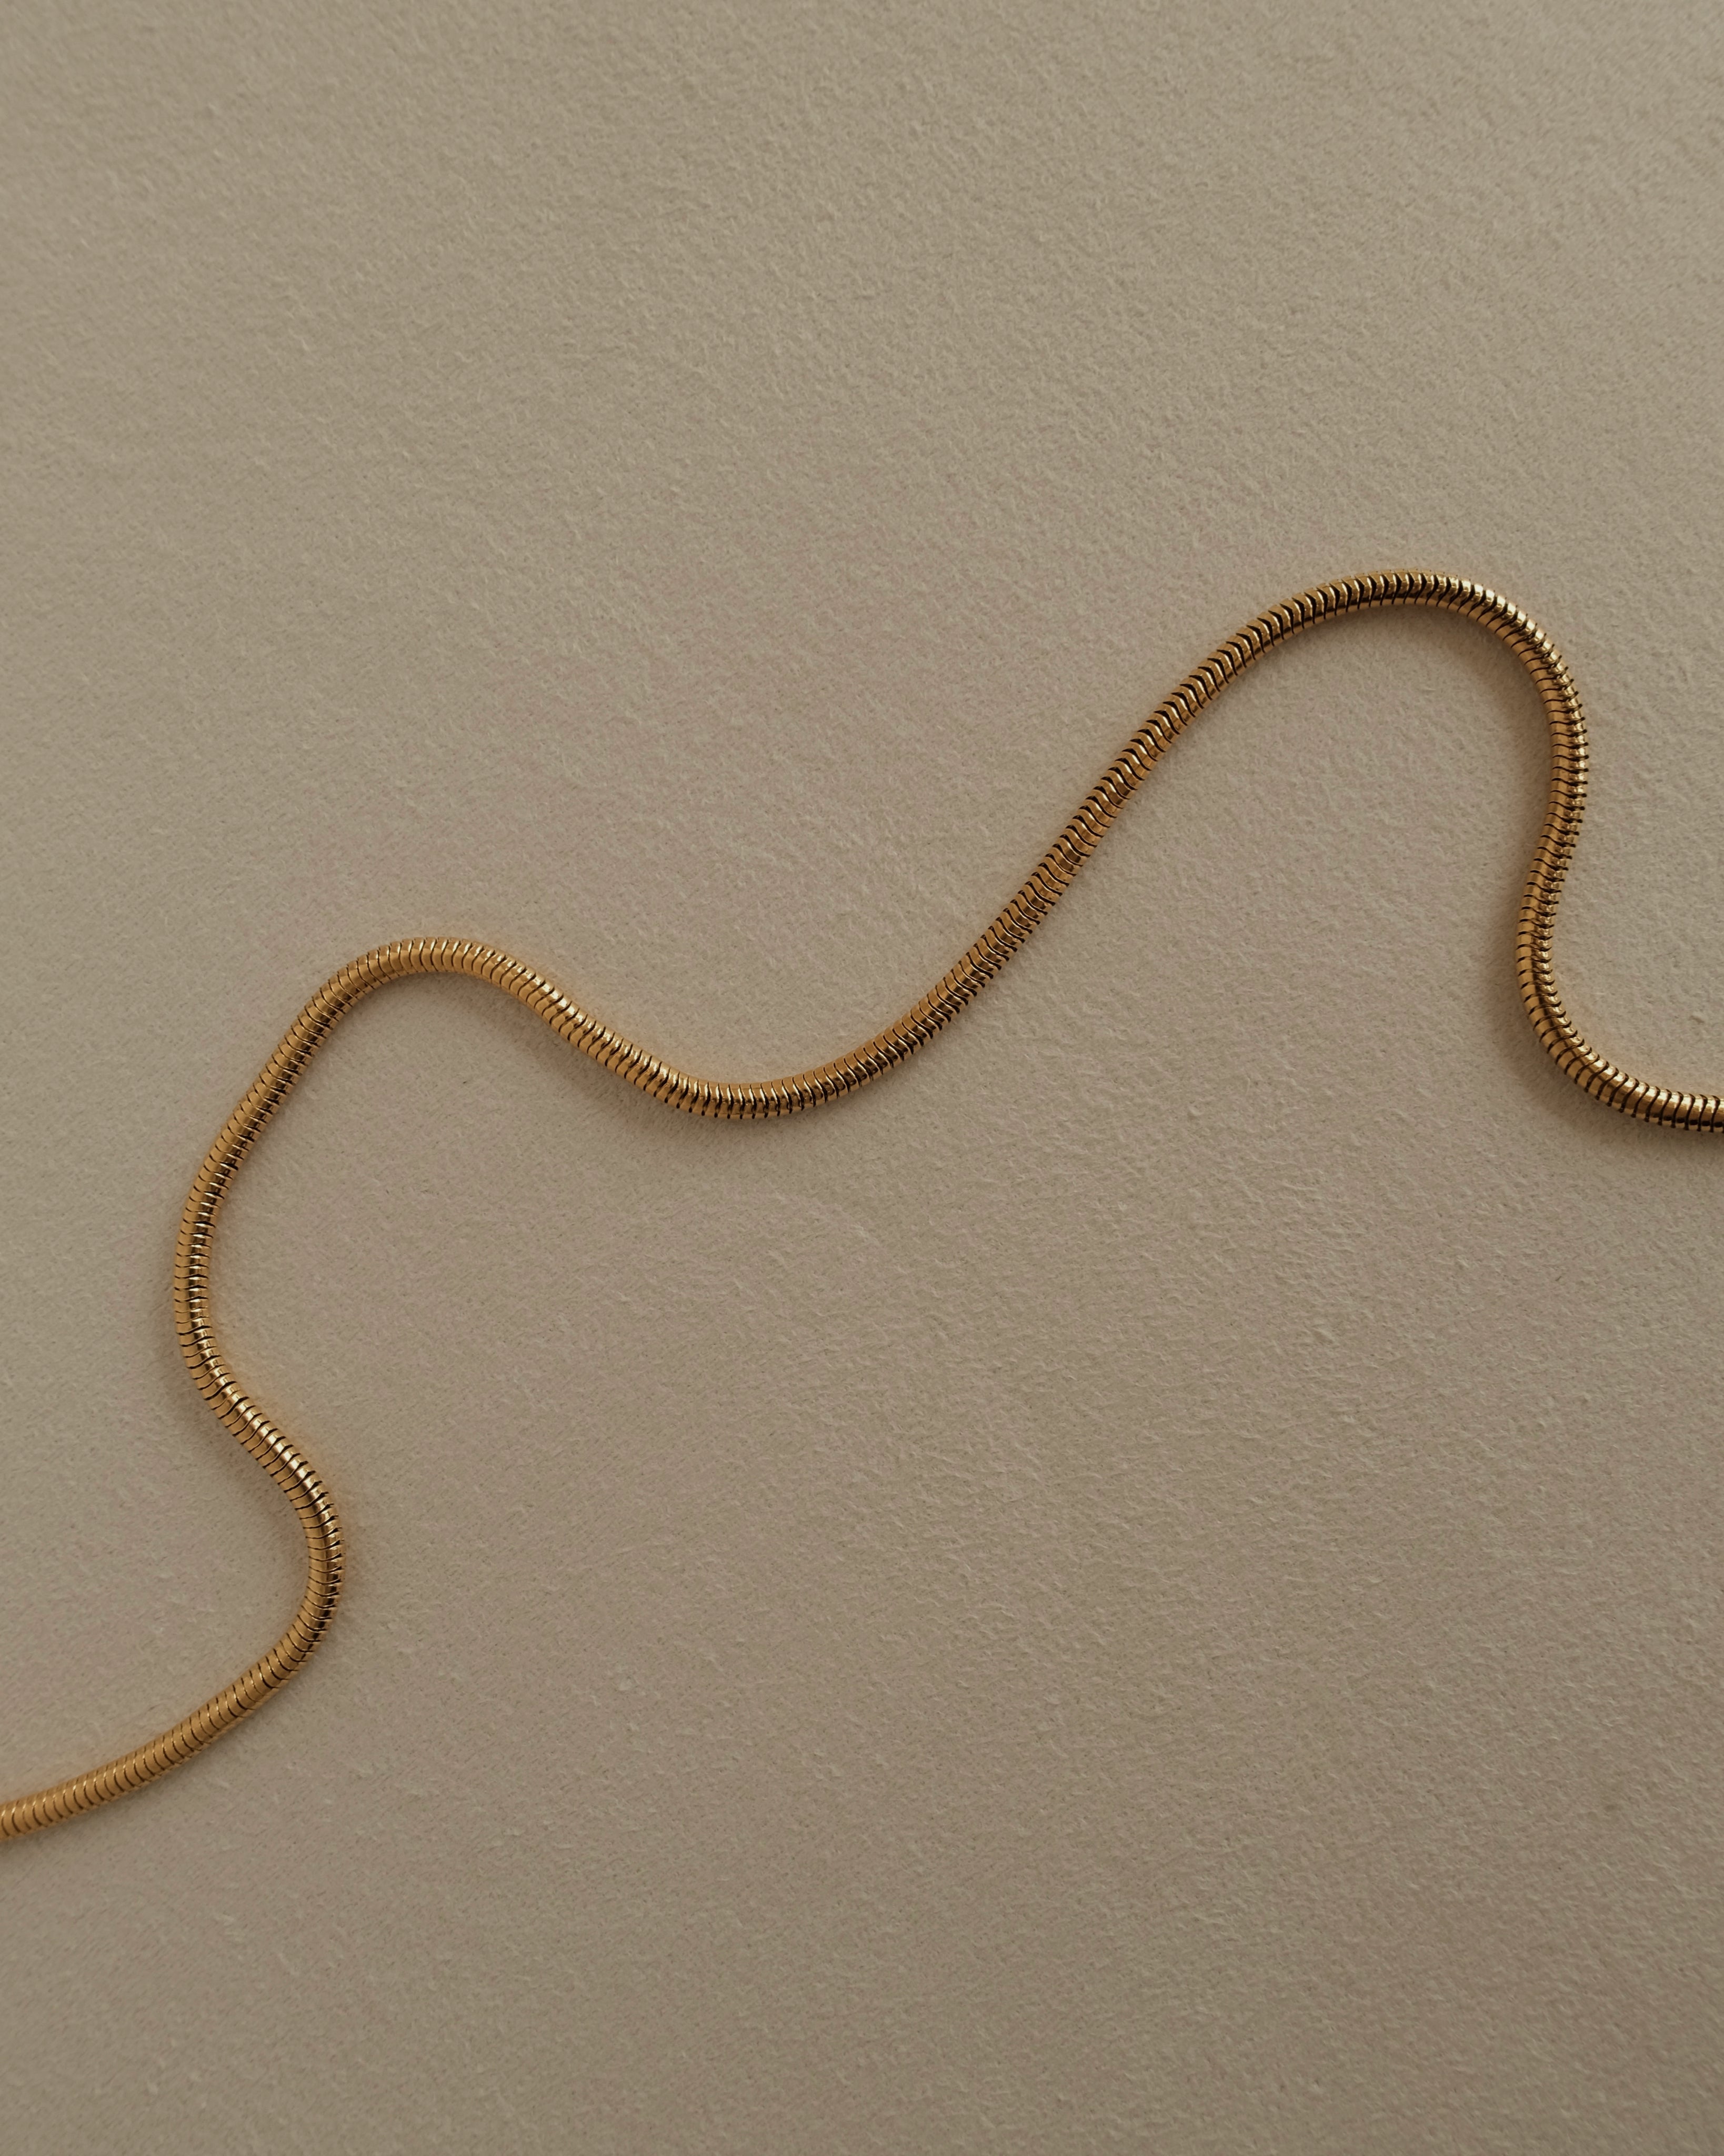 Maely Round Herringbone Snake Chain Necklace